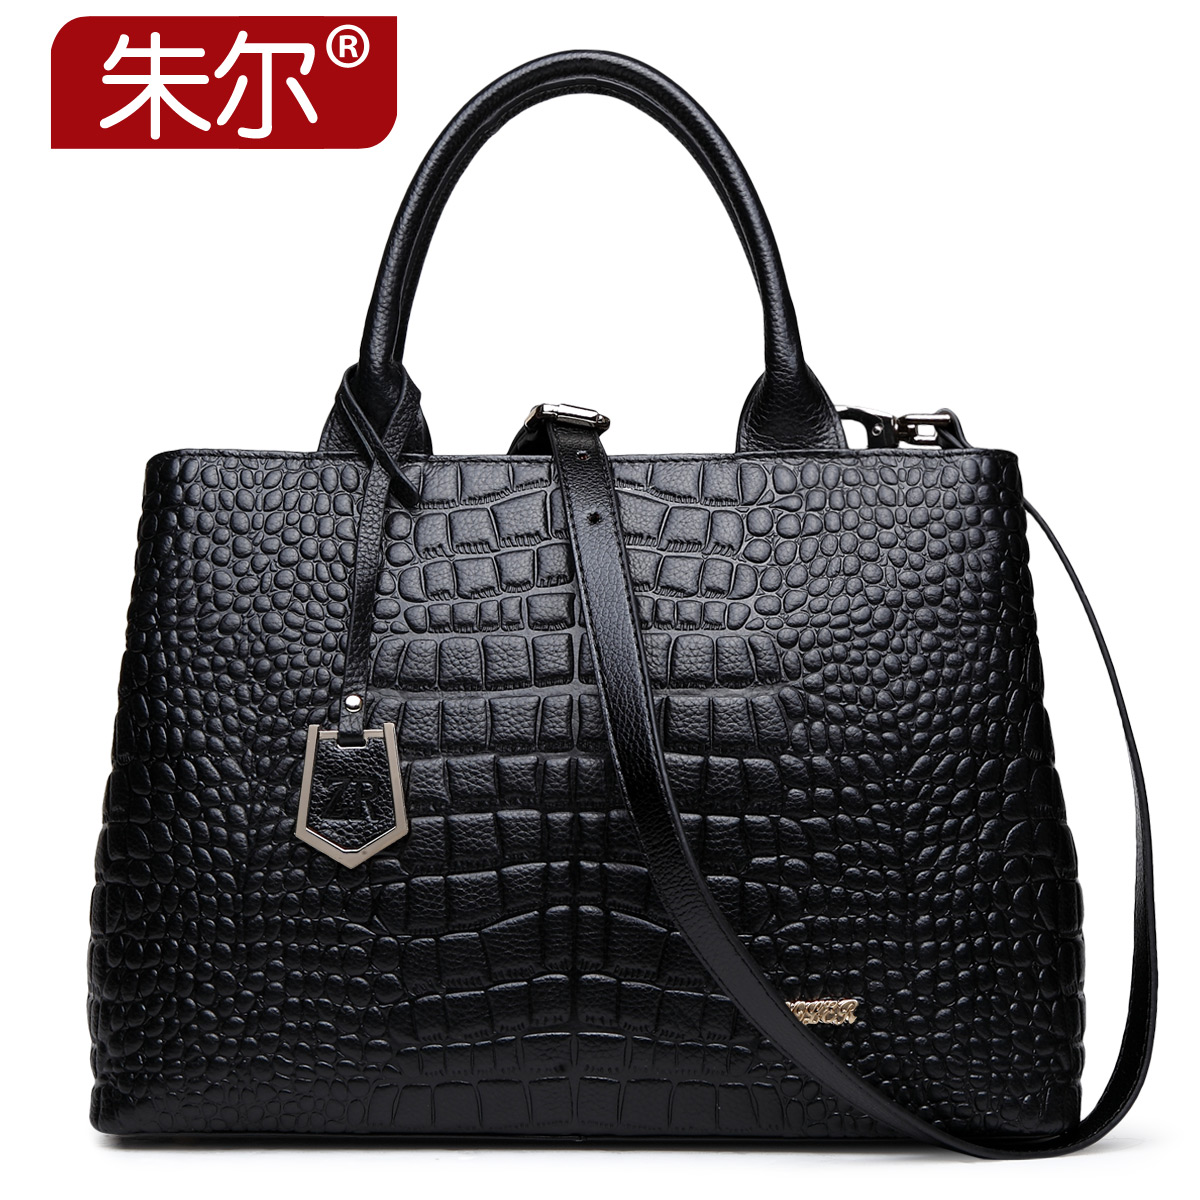 For Crocodile women's casual women's bag genuine leather handbag leather bag shoulder bag handbag 2015